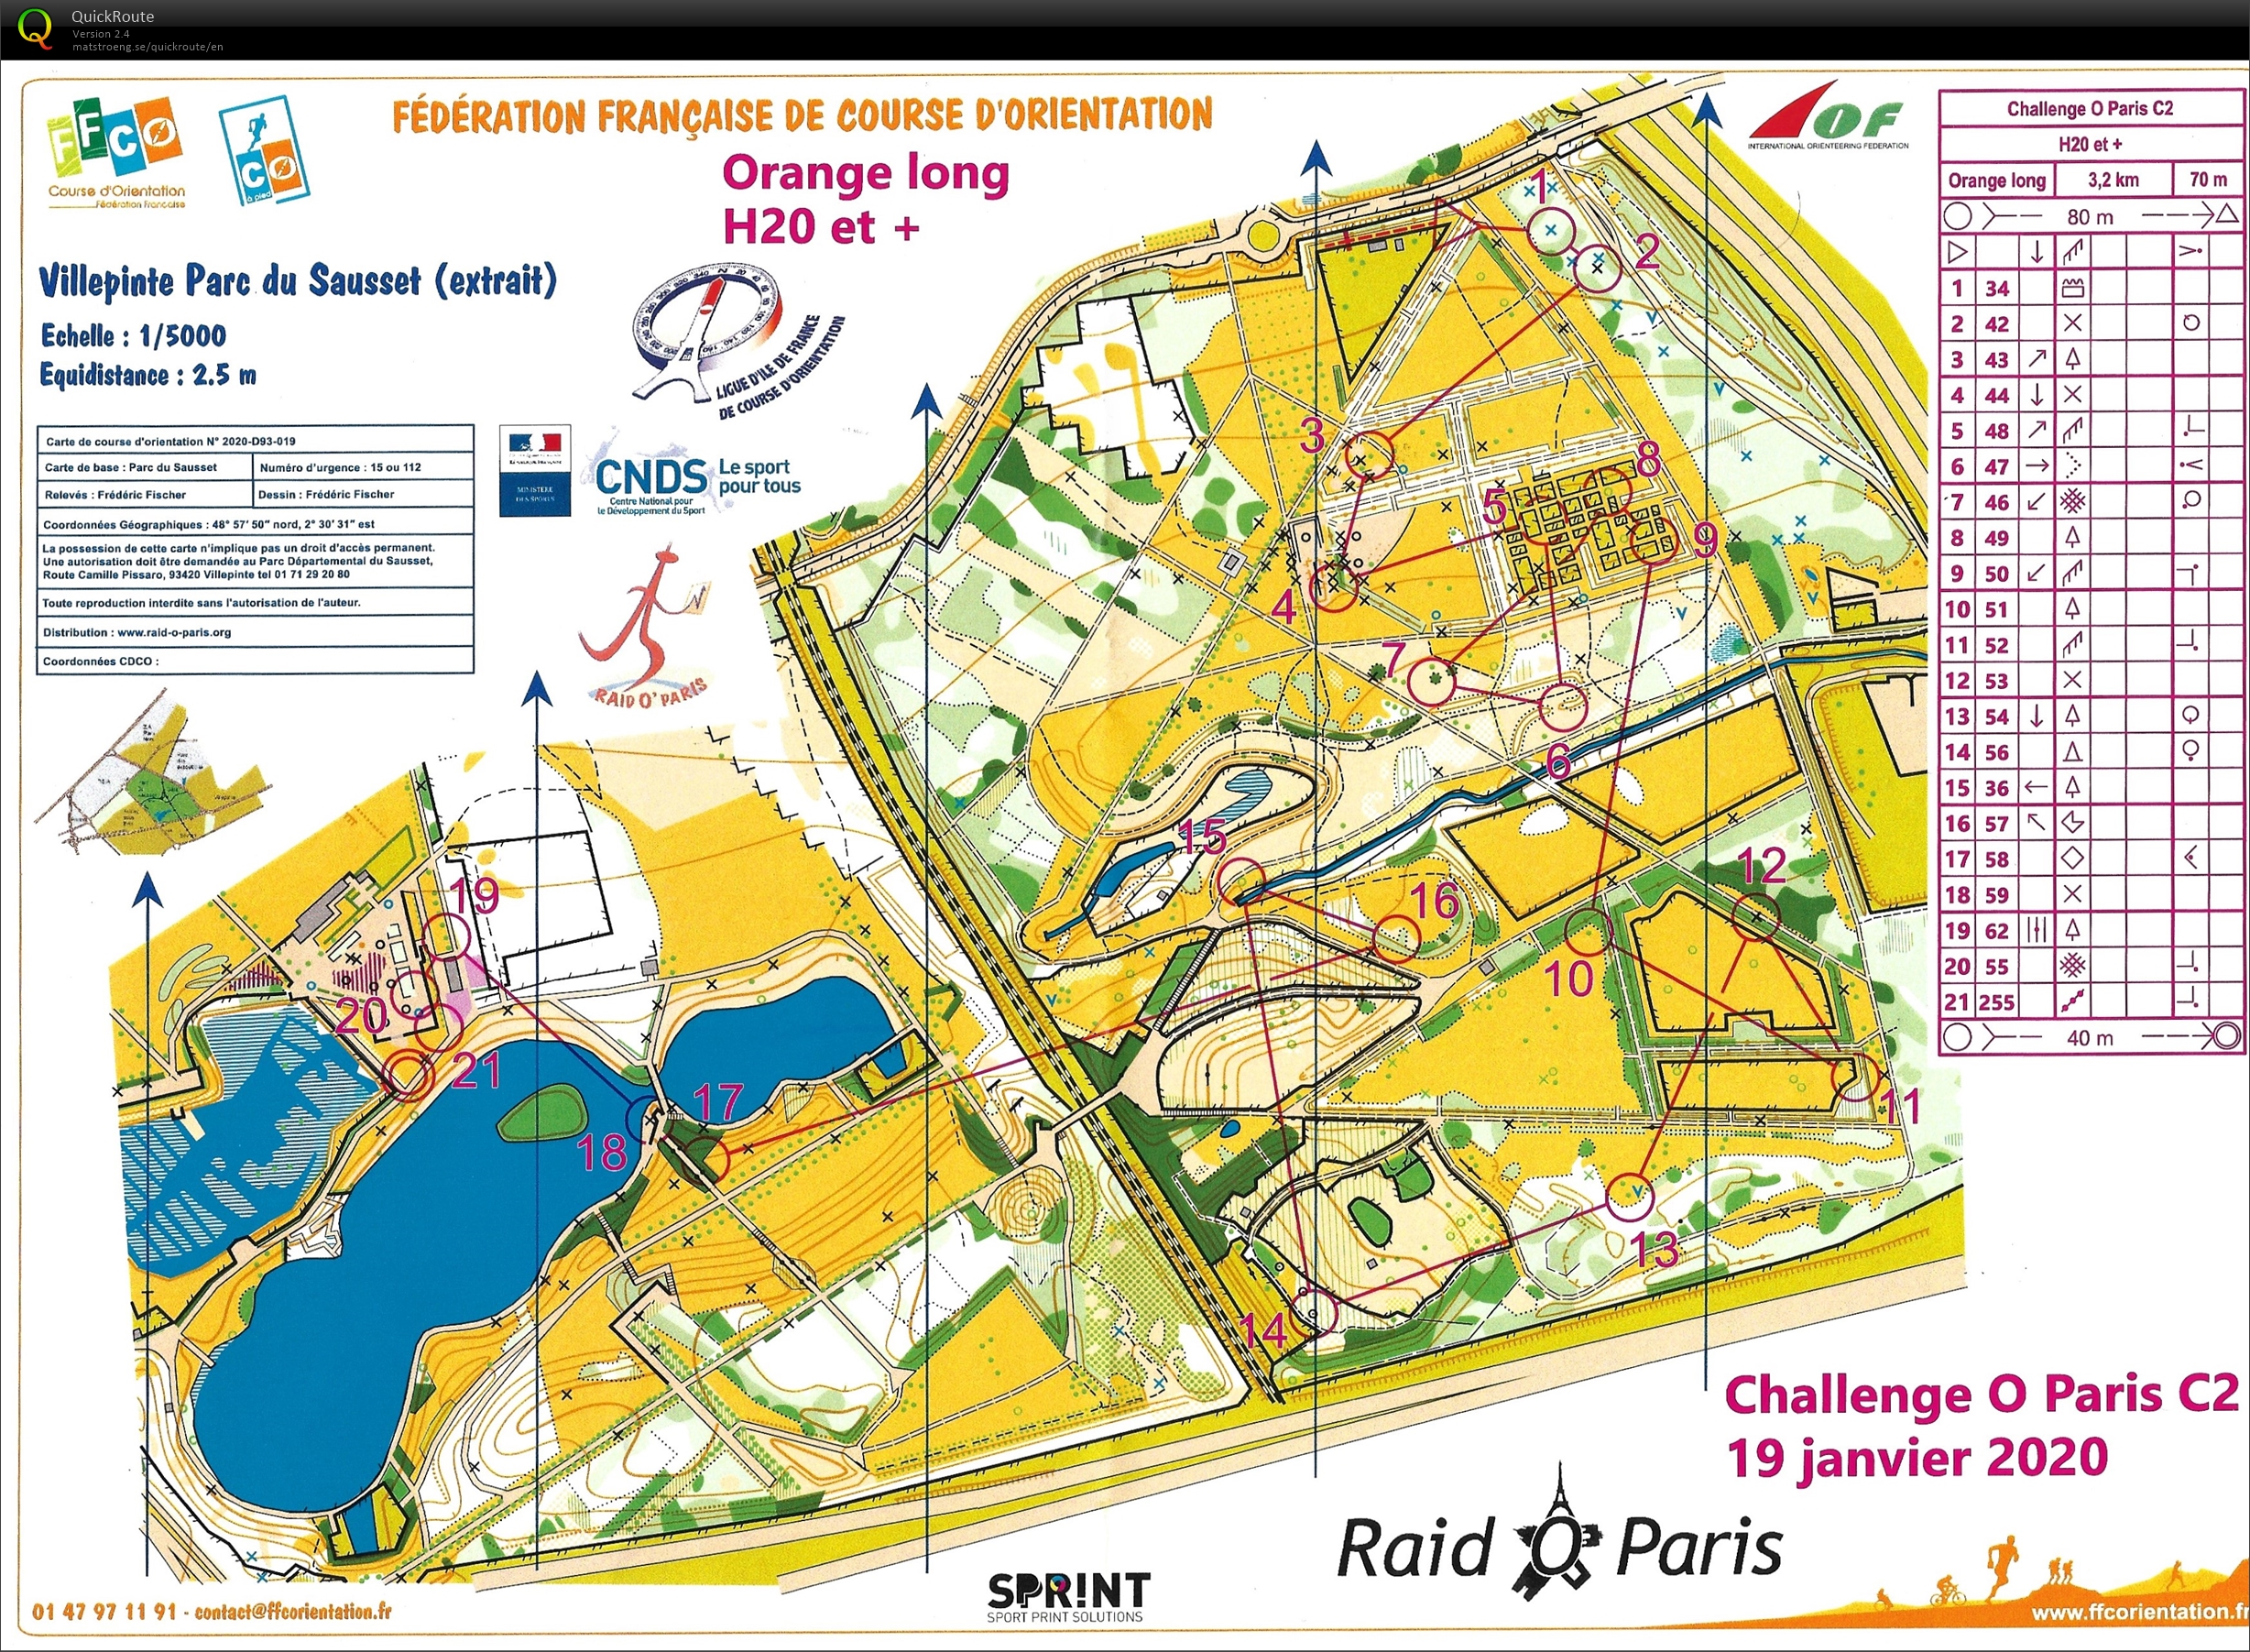 Challenge O Paris C2 Sprint (19/01/2020)